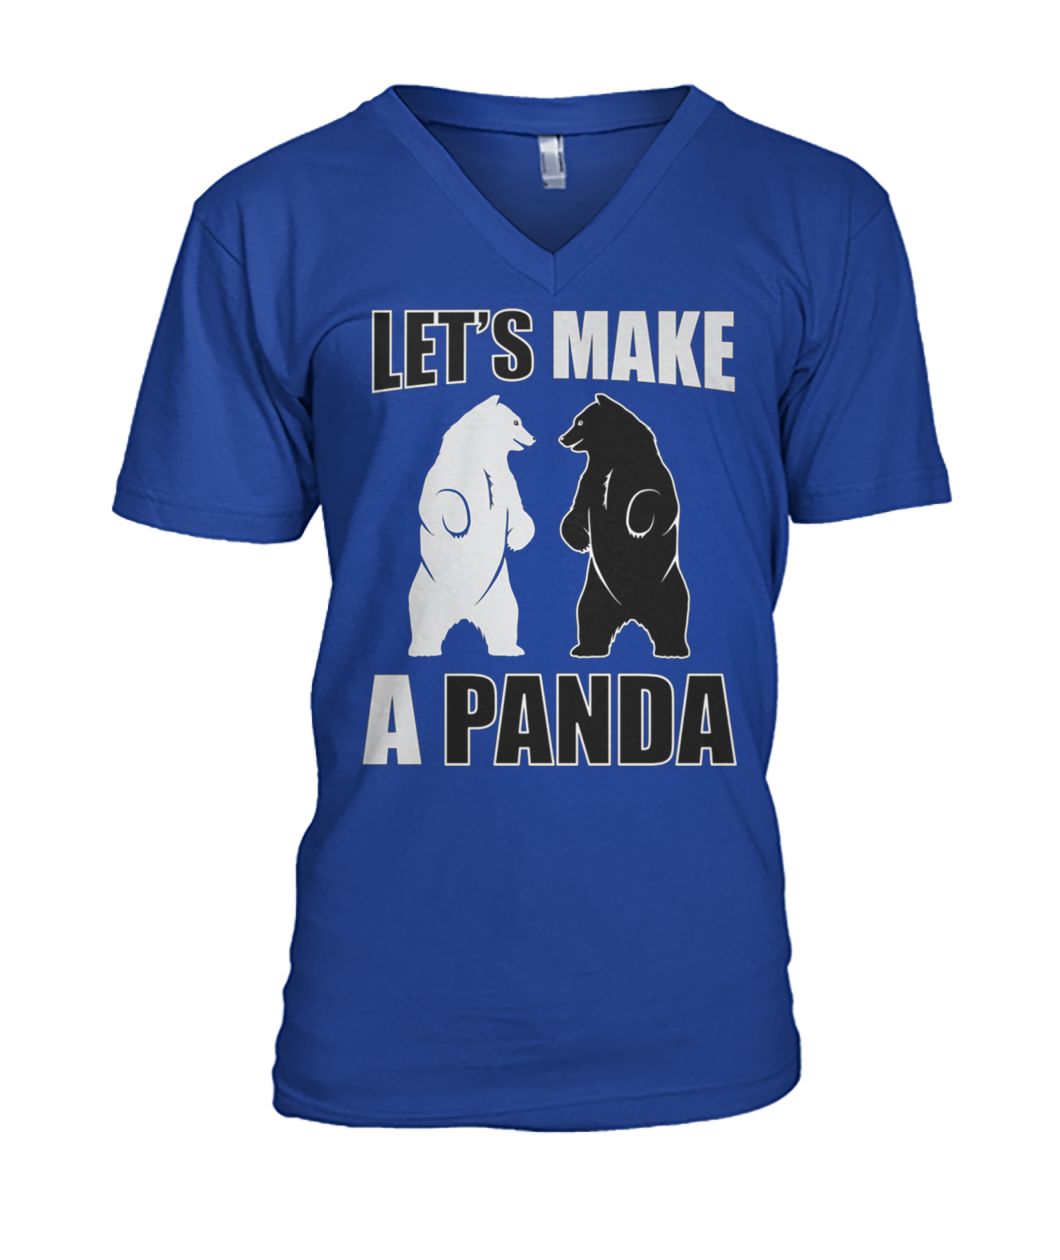 Let's make a panda mens v-neck